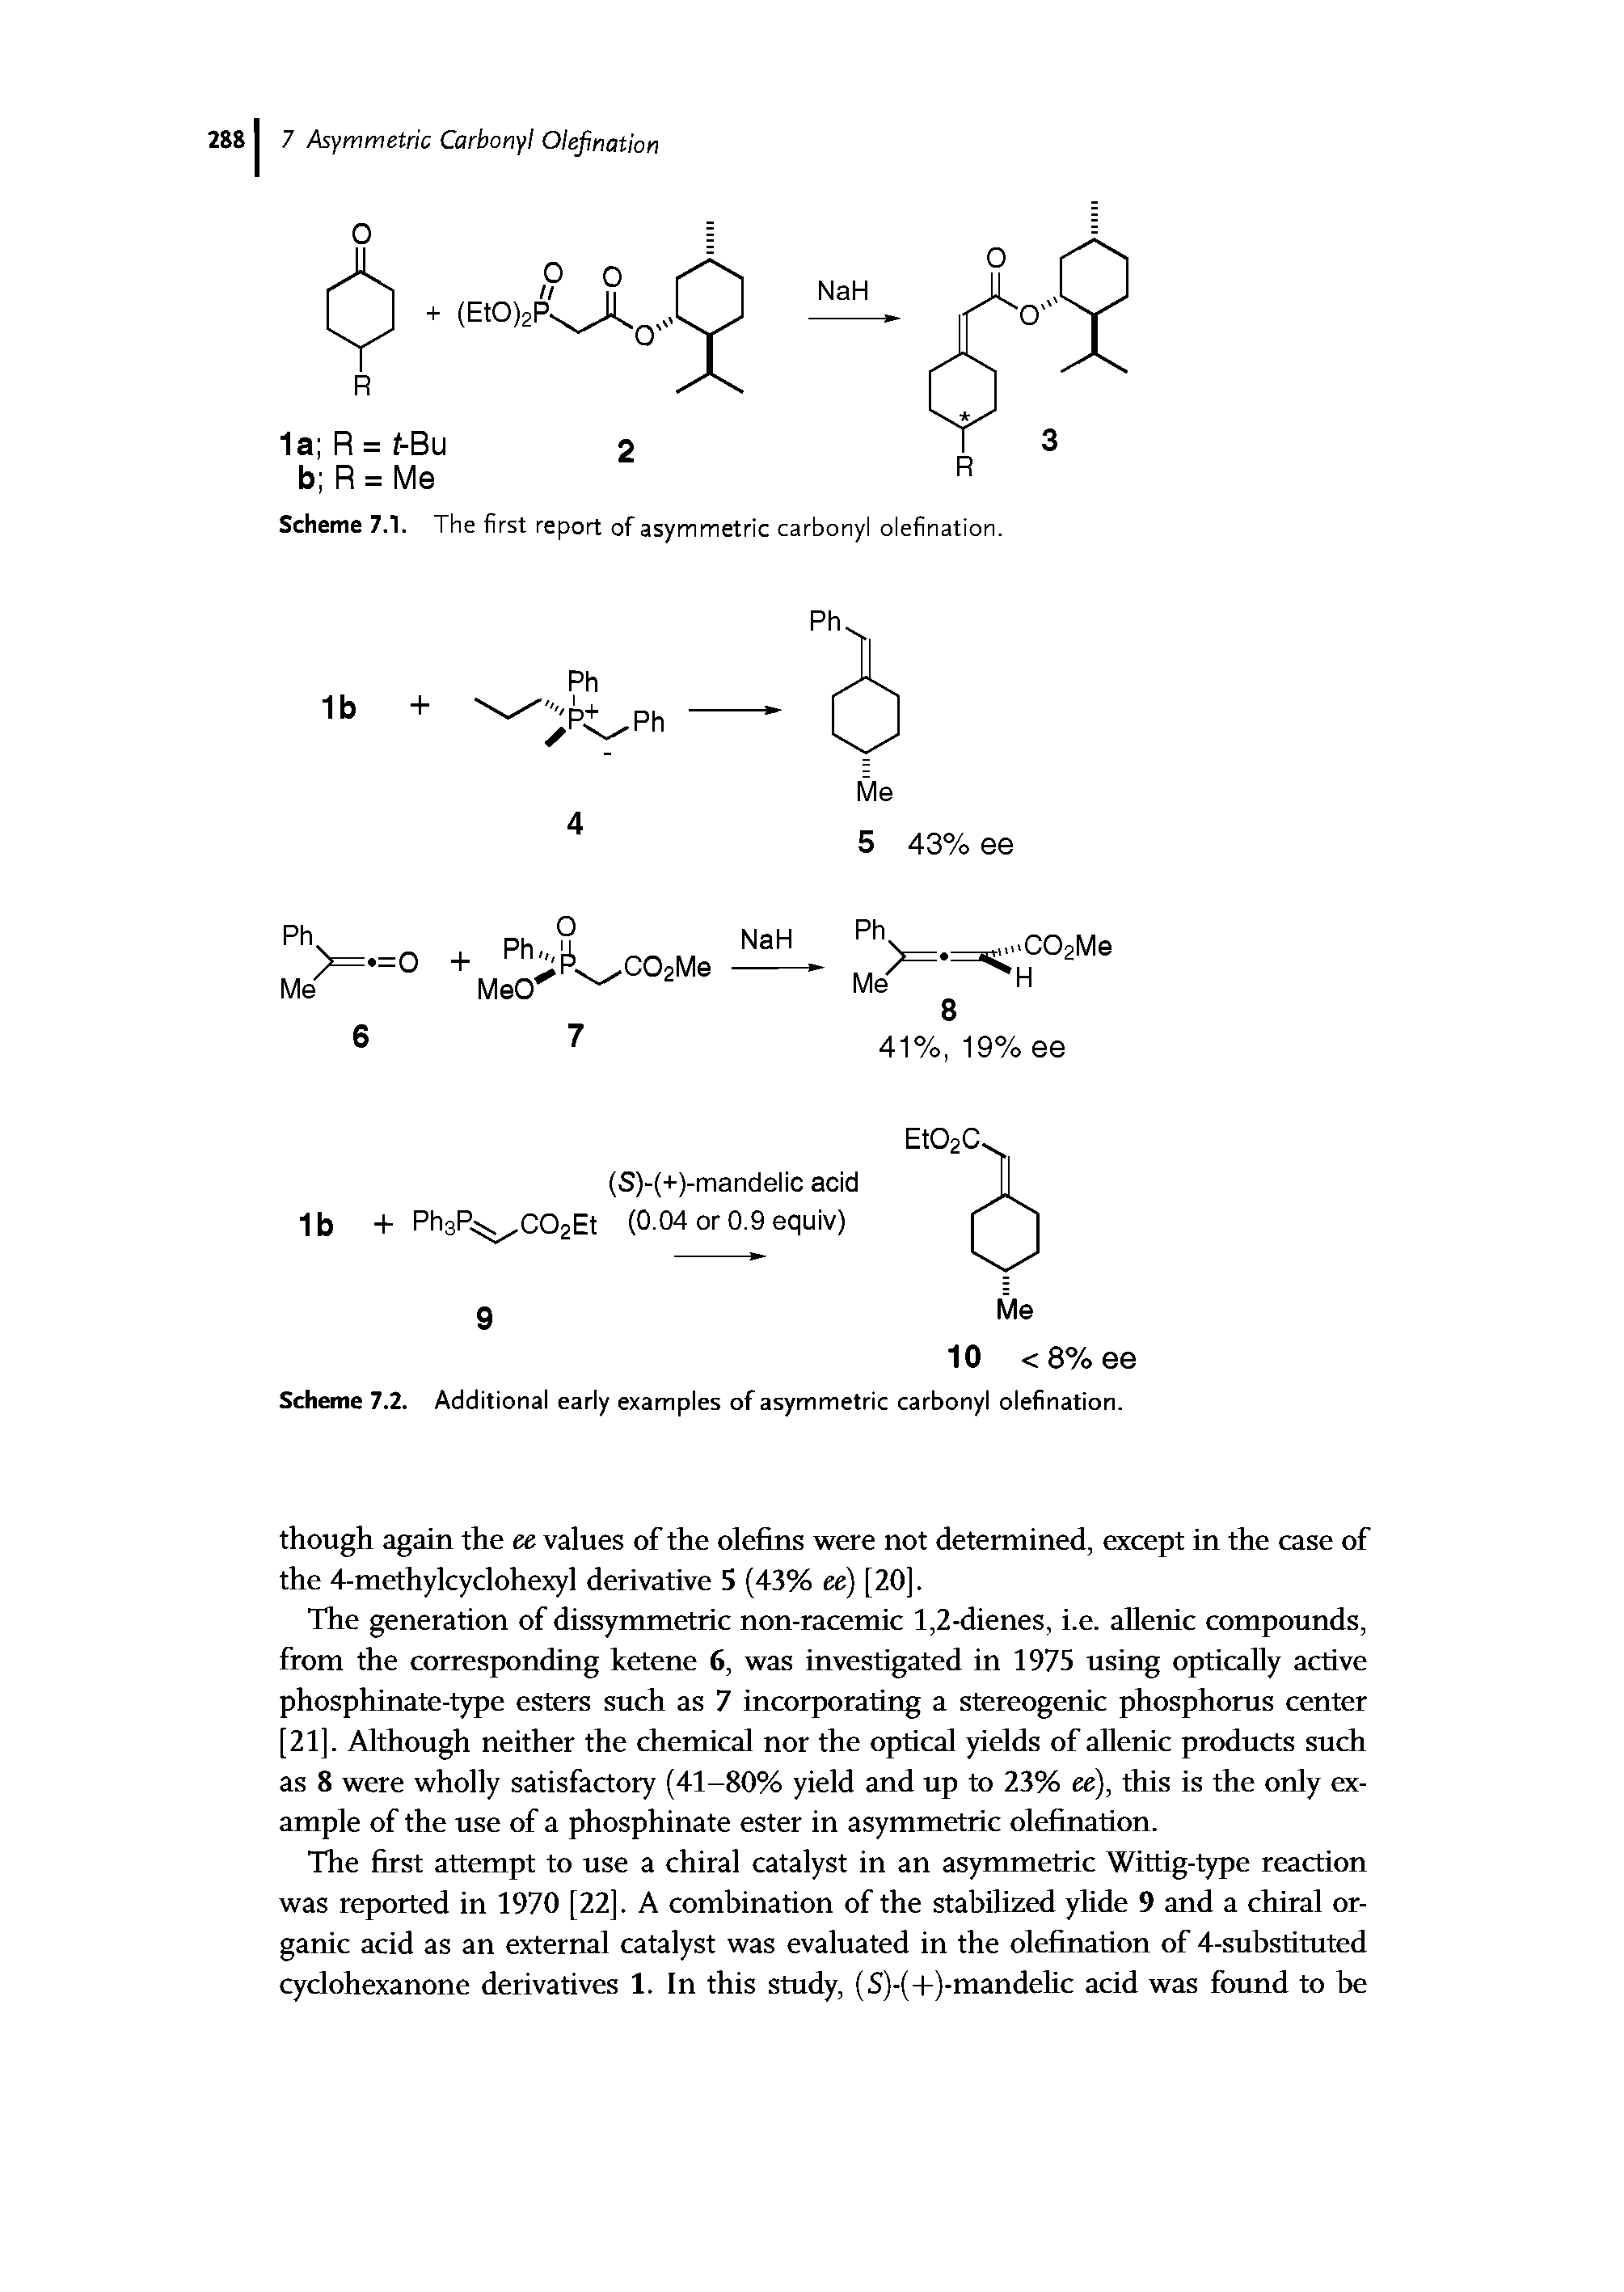 Scheme 7.1. The first report of asymmetric carbonyl olefination.